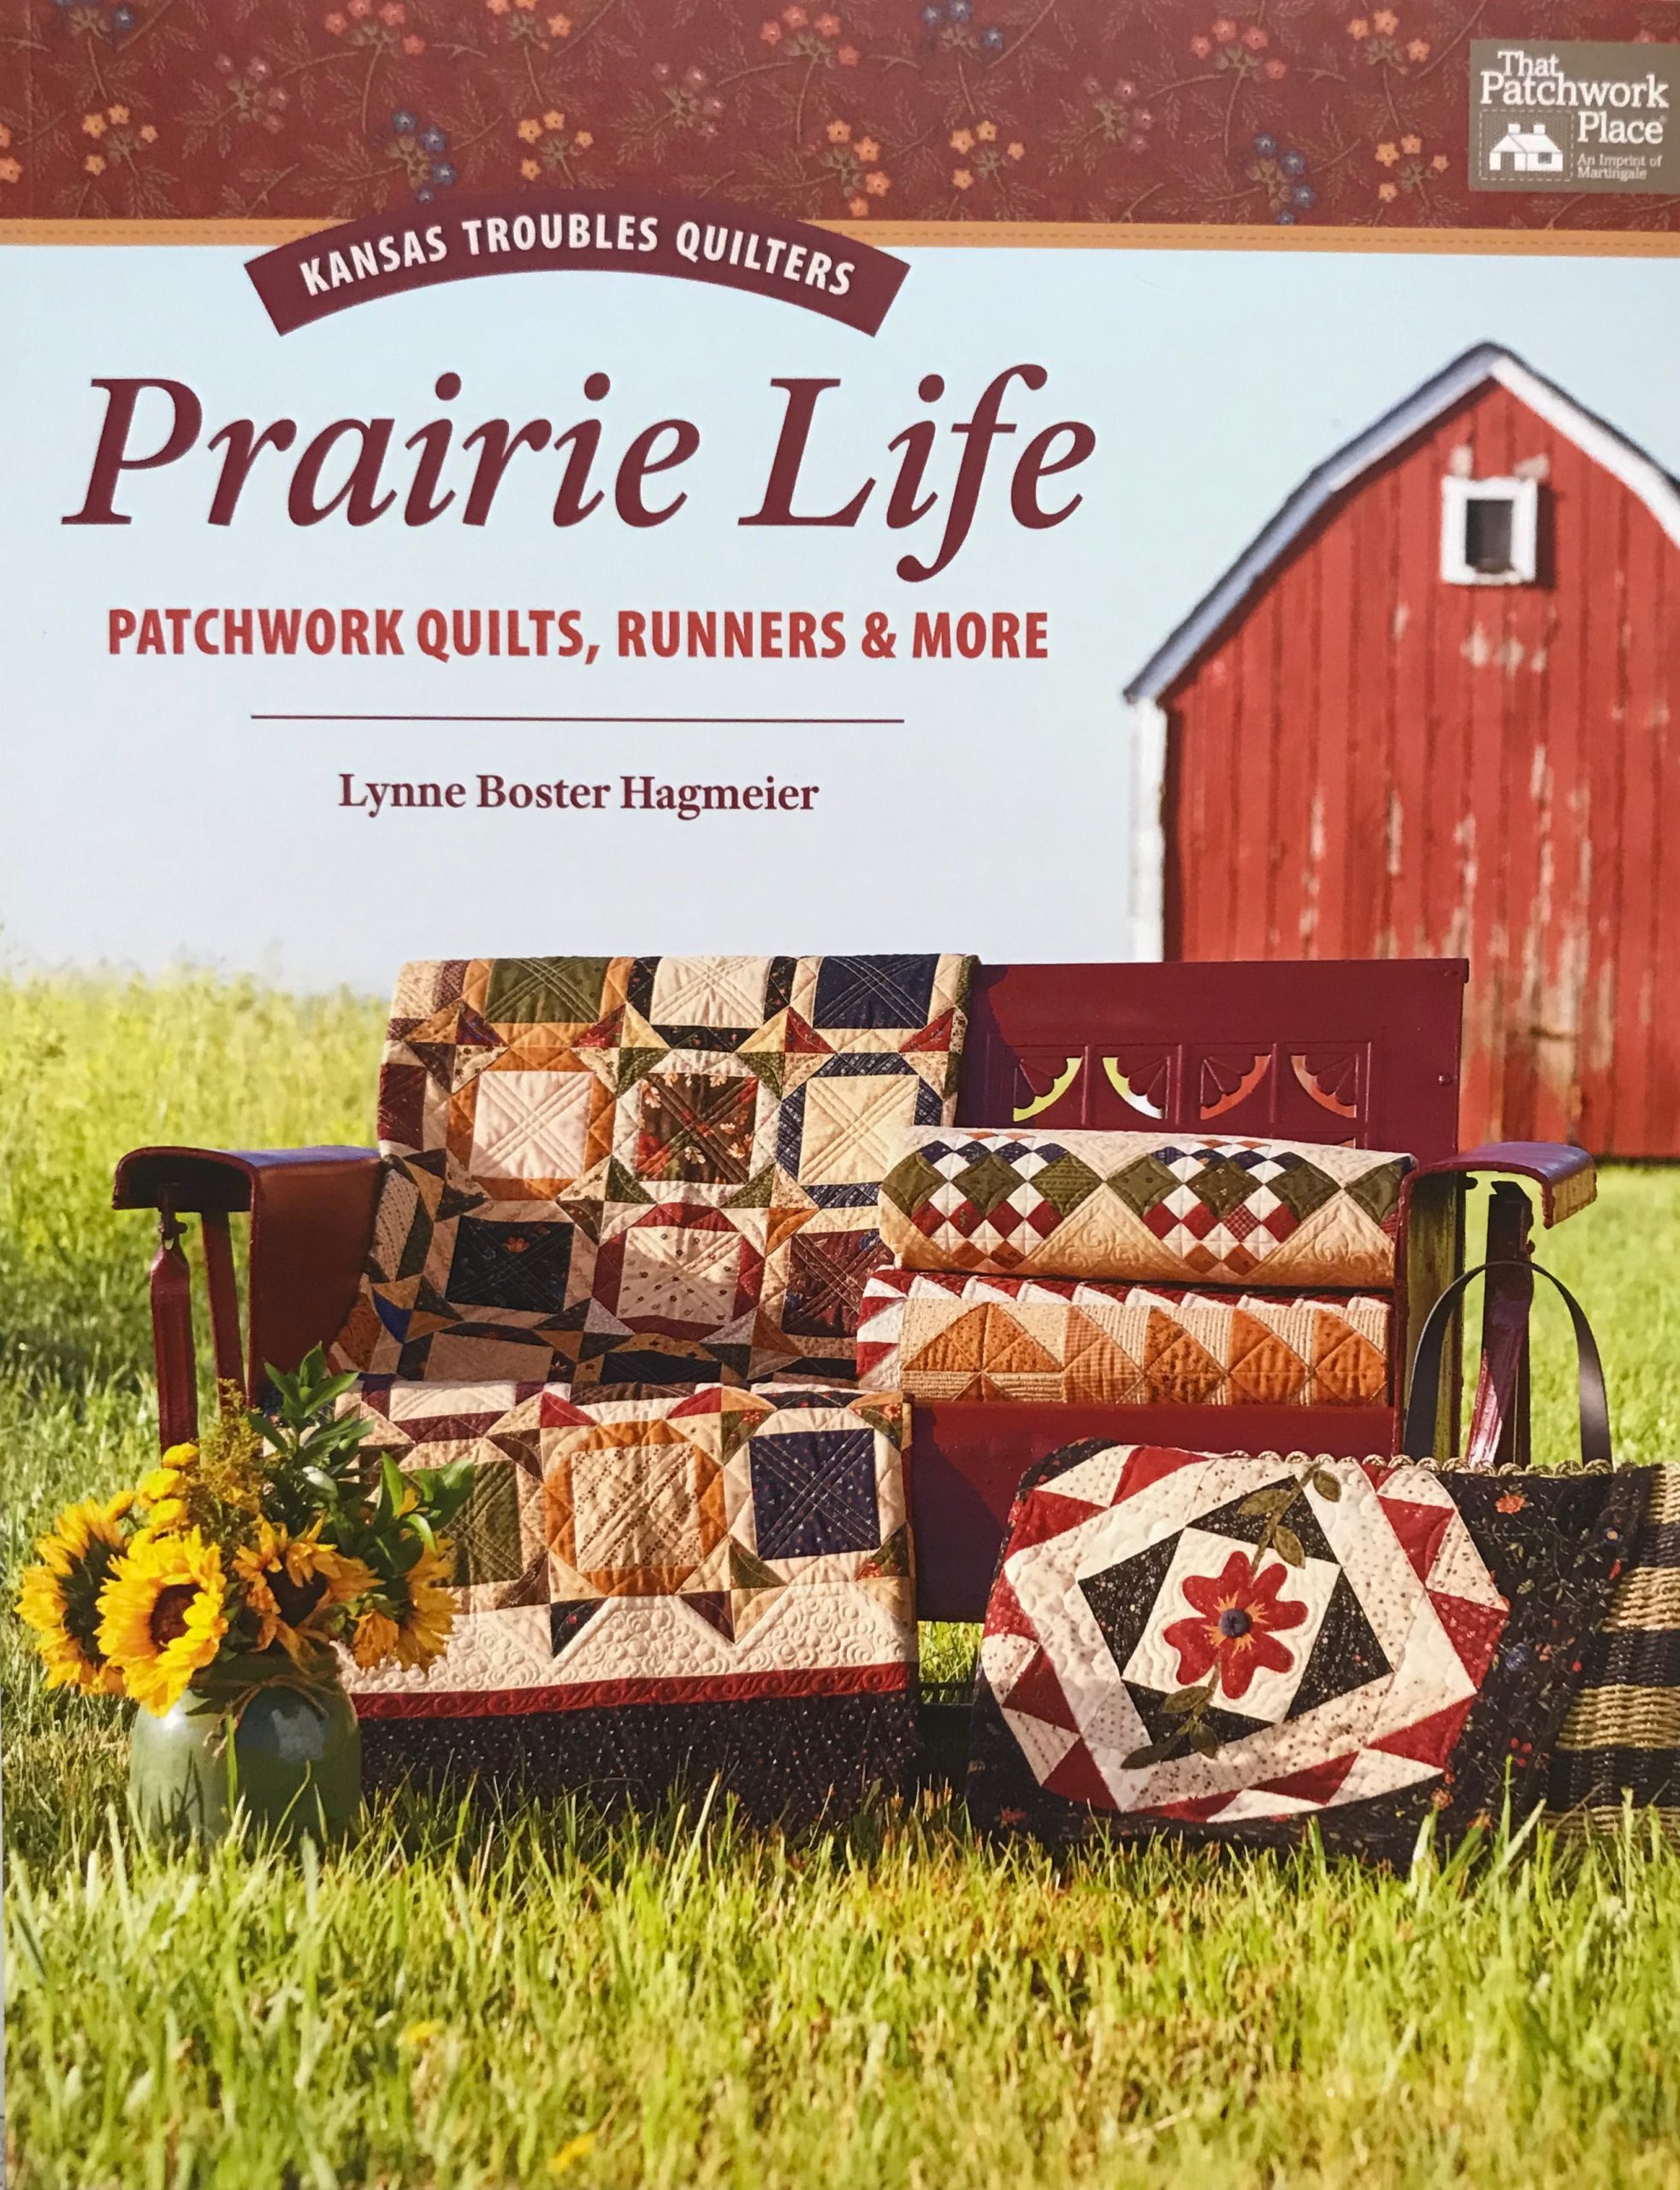 Kansas Troubles Quilters - Prairie Life